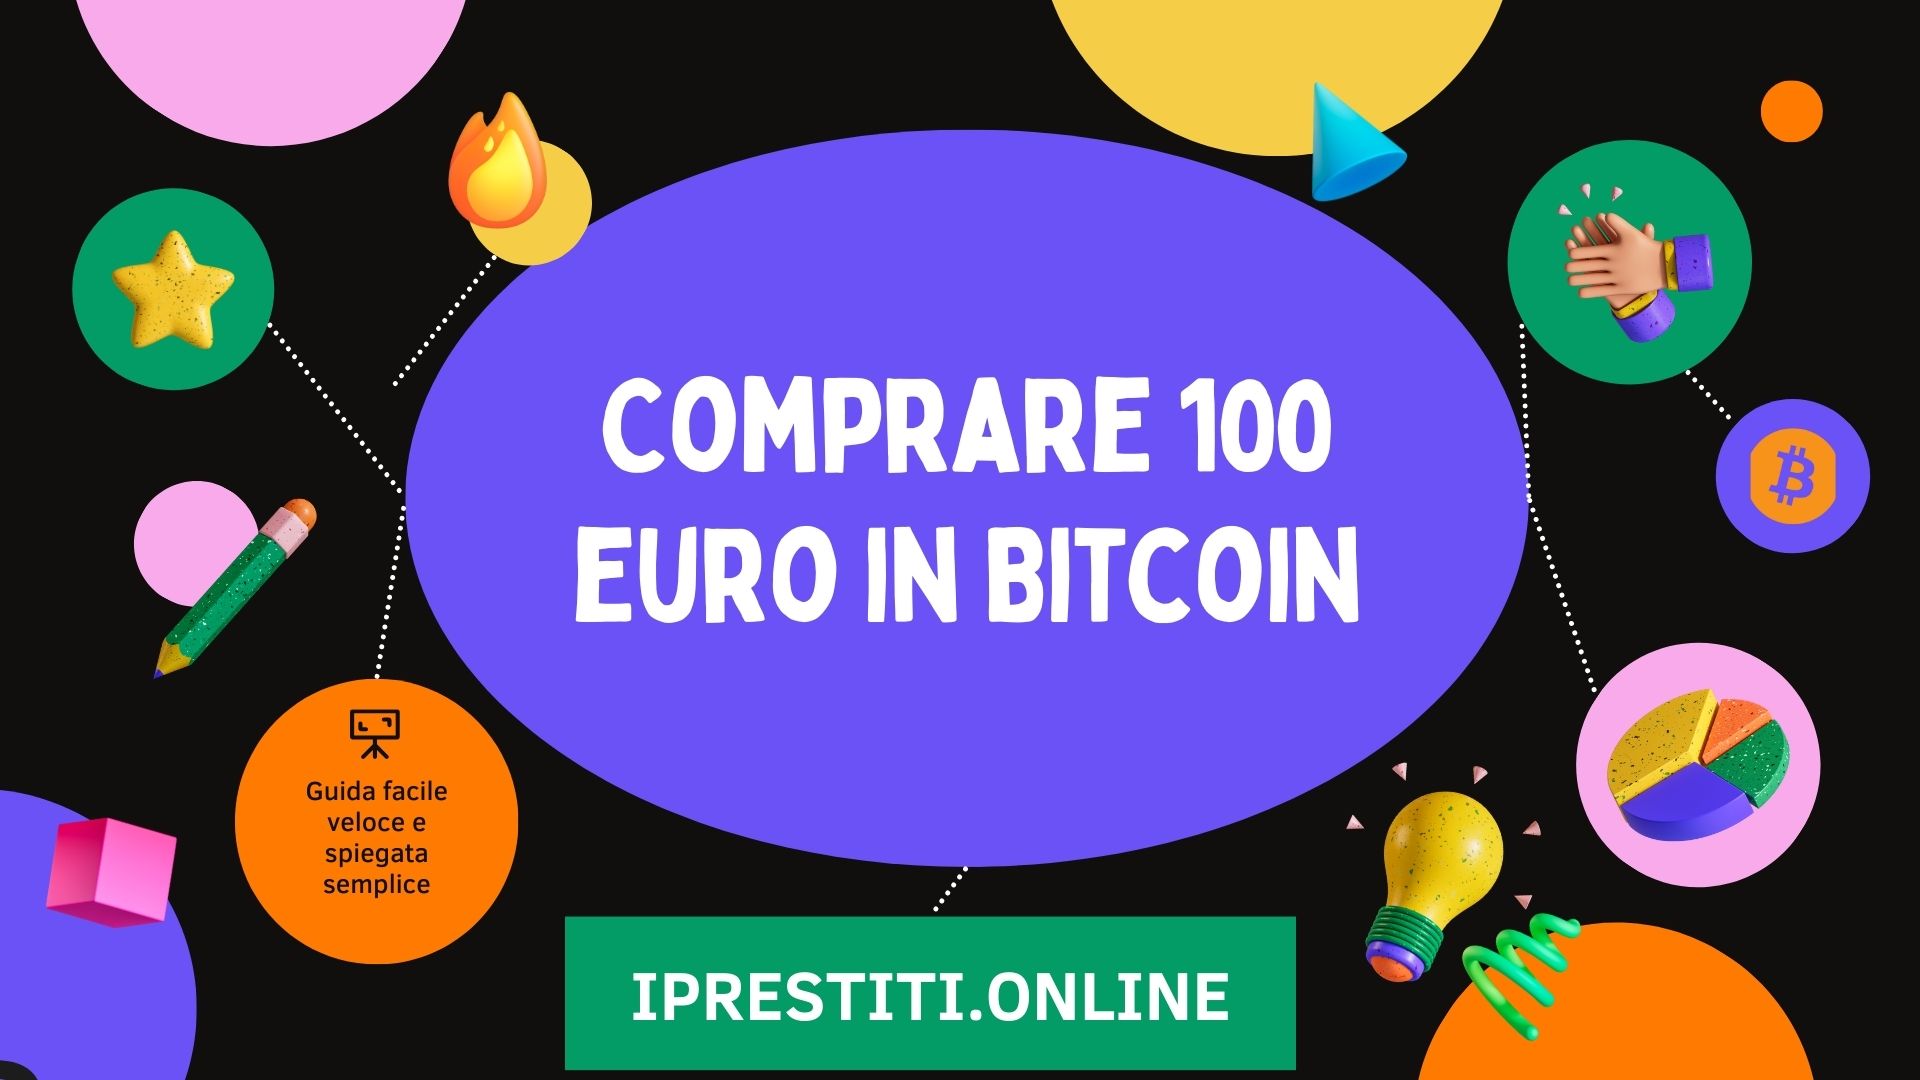 Comprare 100 euro in Bitcoin